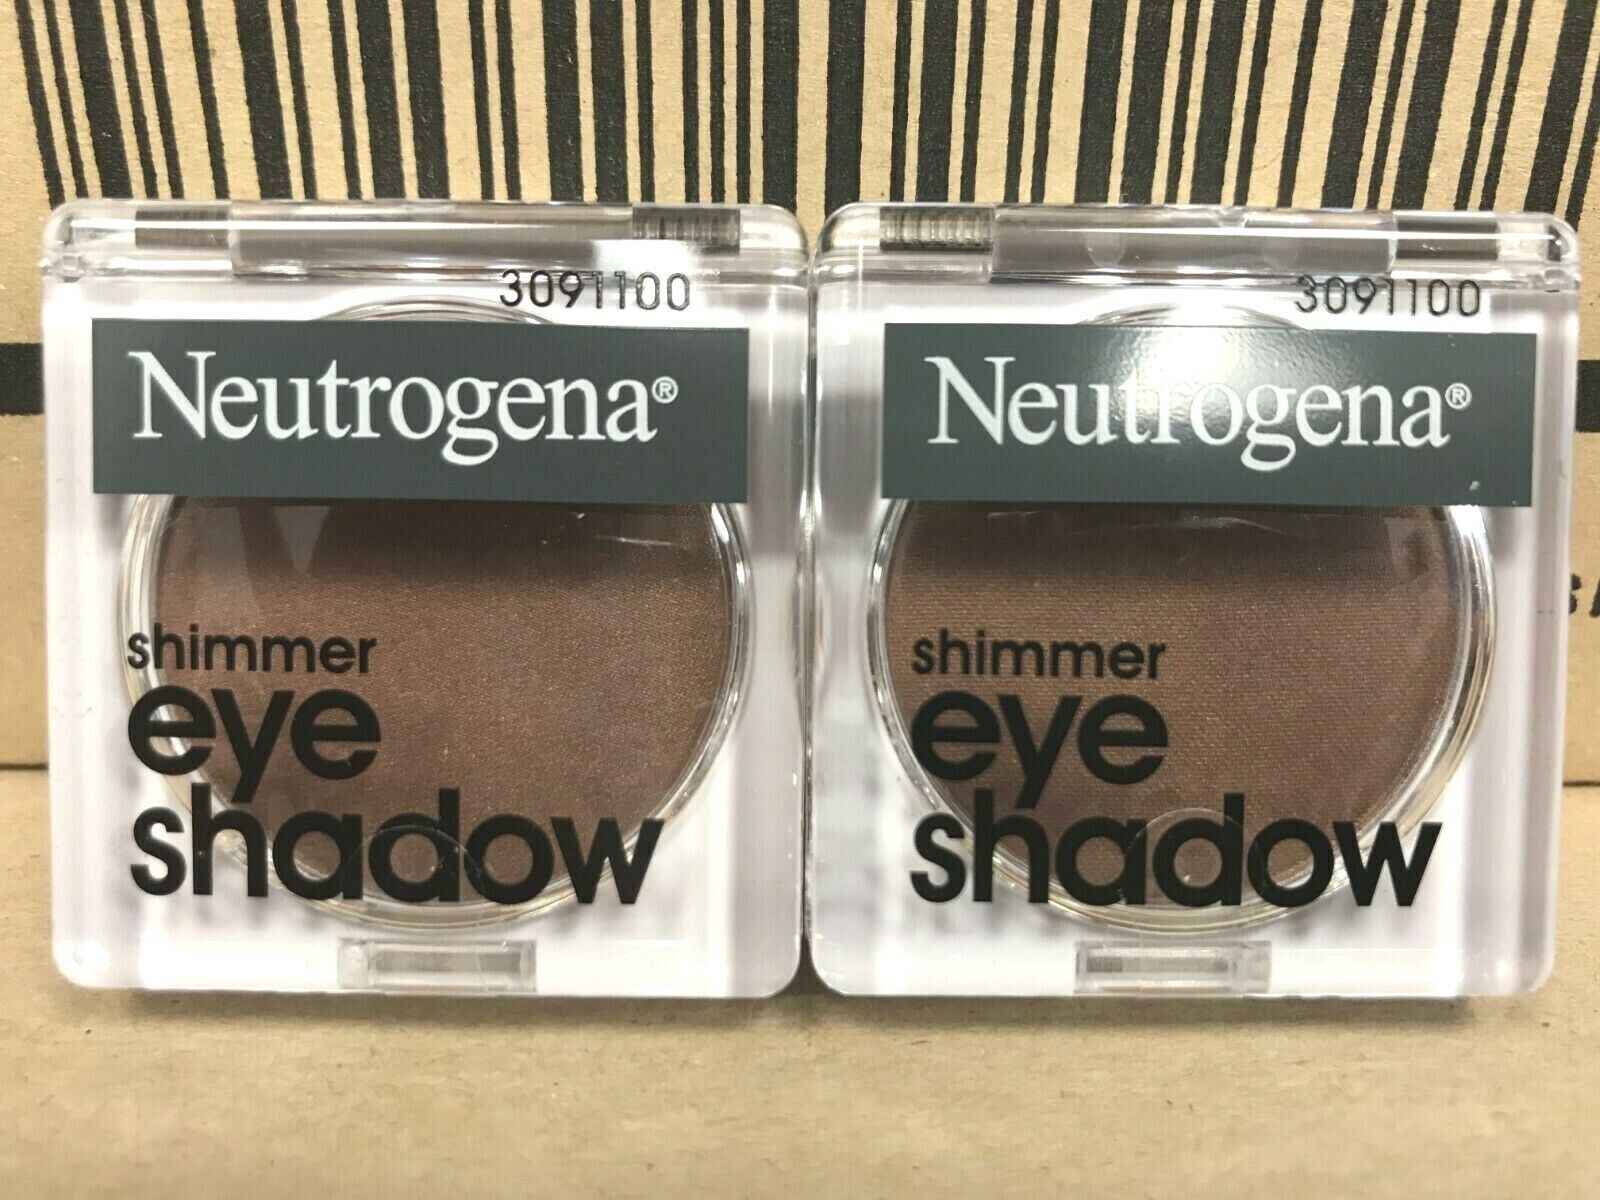 Neutrogena Shimmer Burnt Sienna 2-pack of Eye Shadow w/ Antioxidant Vitamin E - $6.84